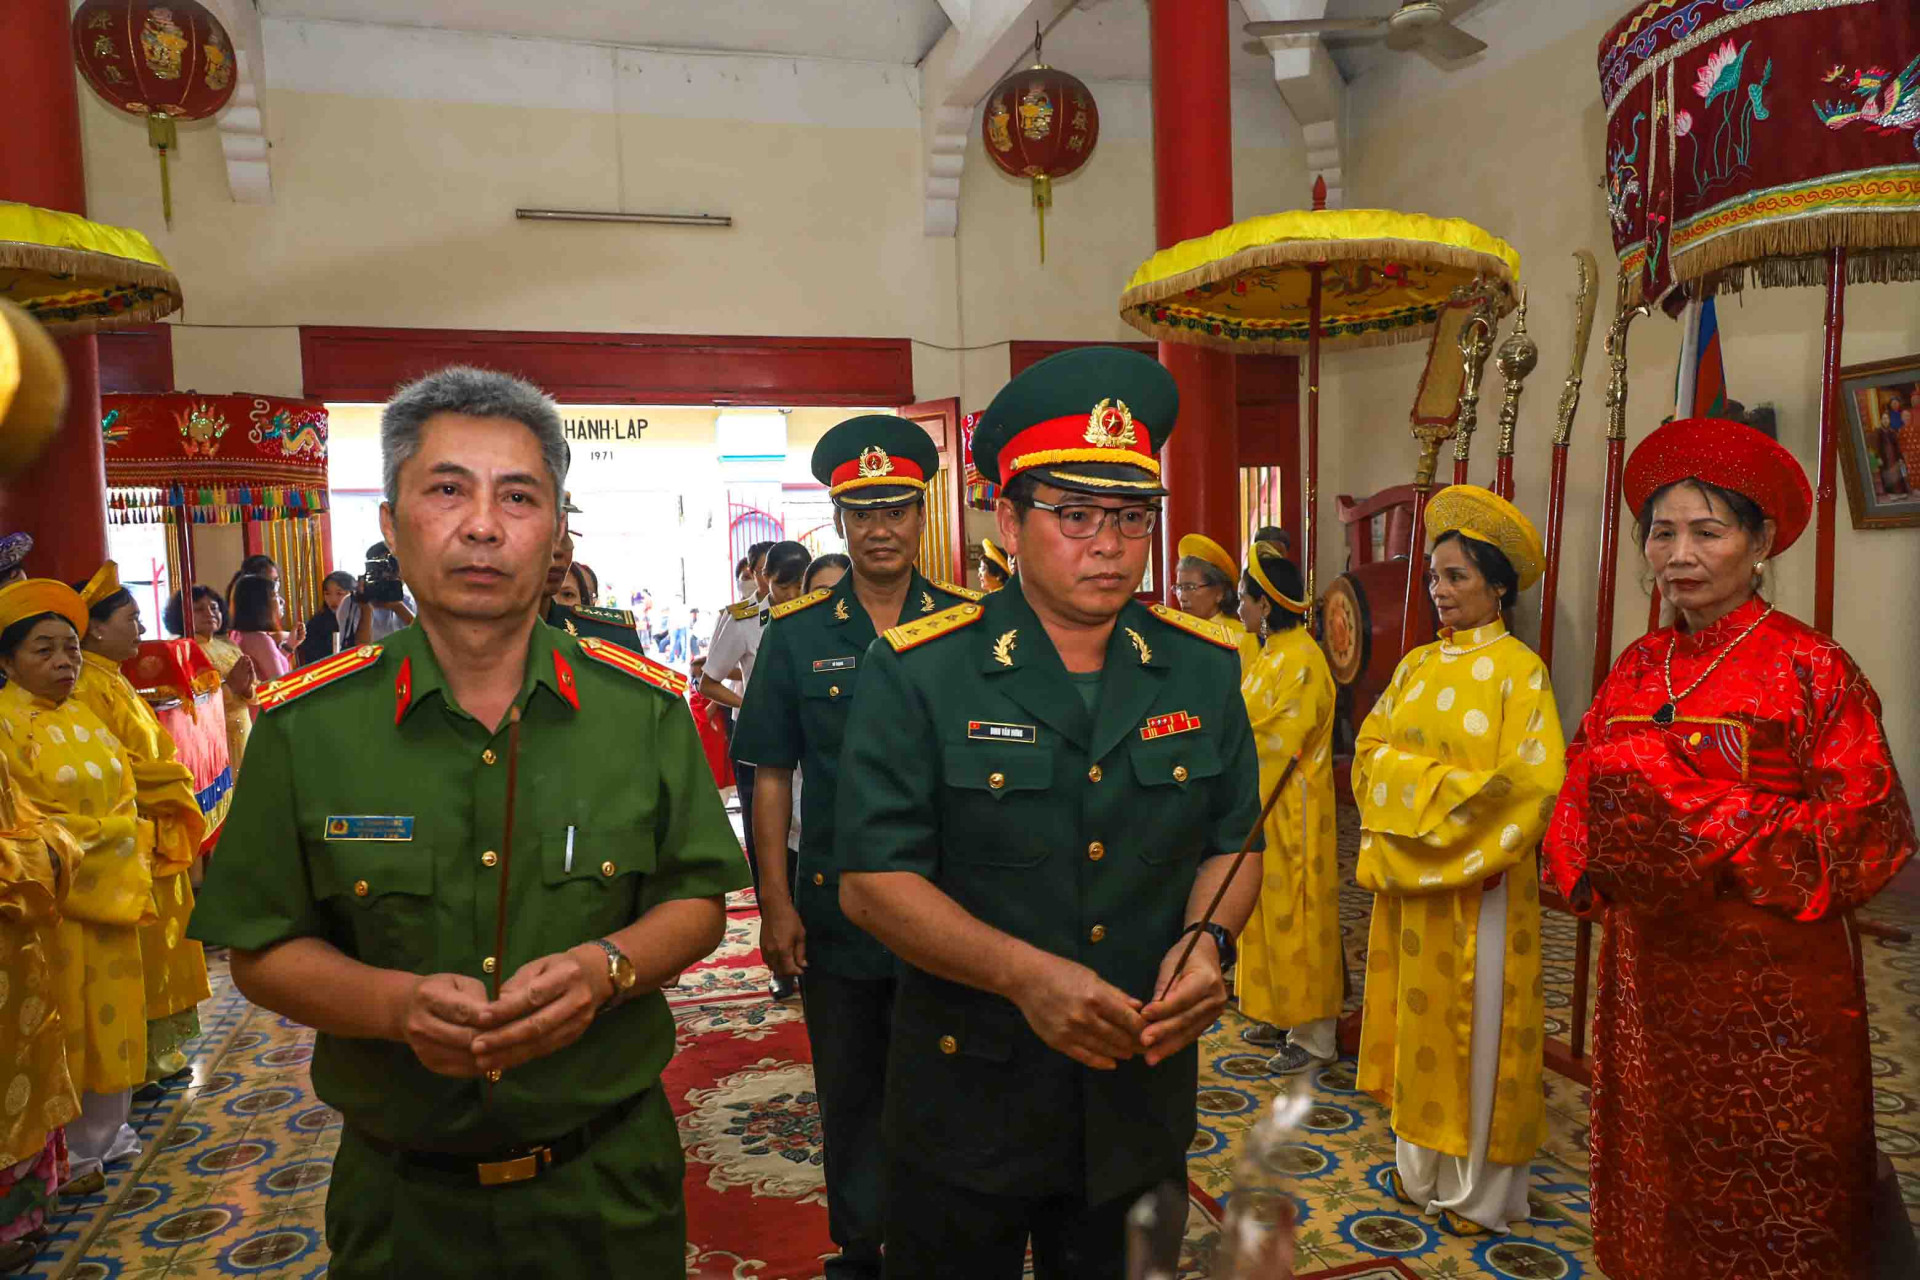 Khanh Hoa’s armed forces representatives